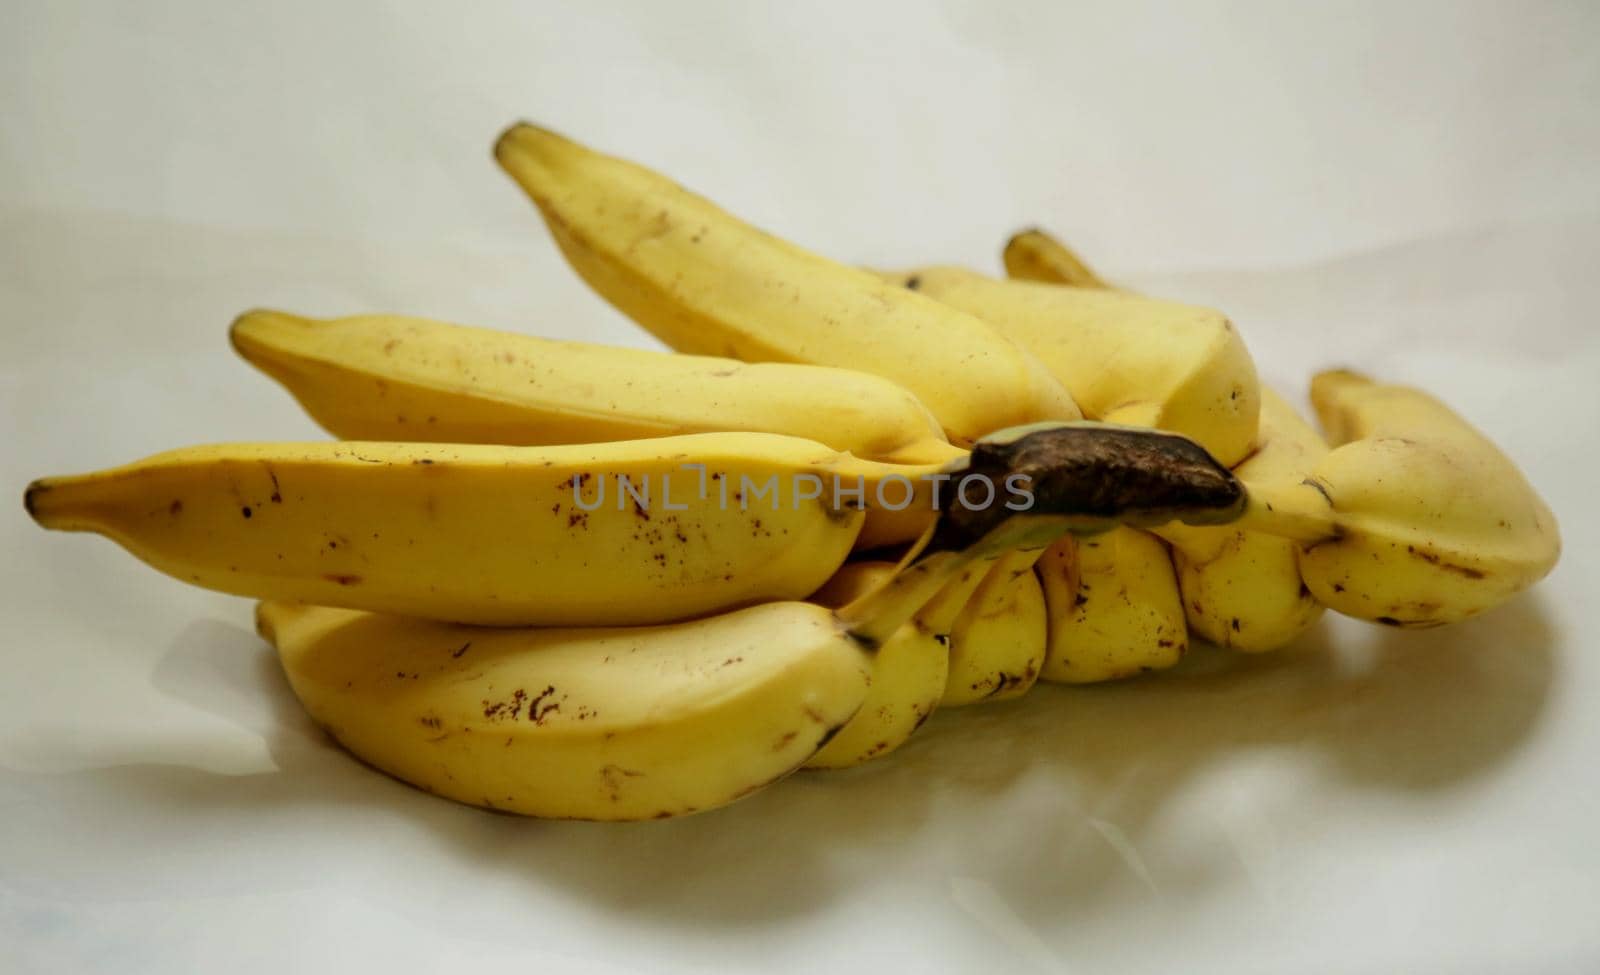 salvador, bahia / brazil - may 24, 2020: bunch of bananas is seen in the city of Salvador.